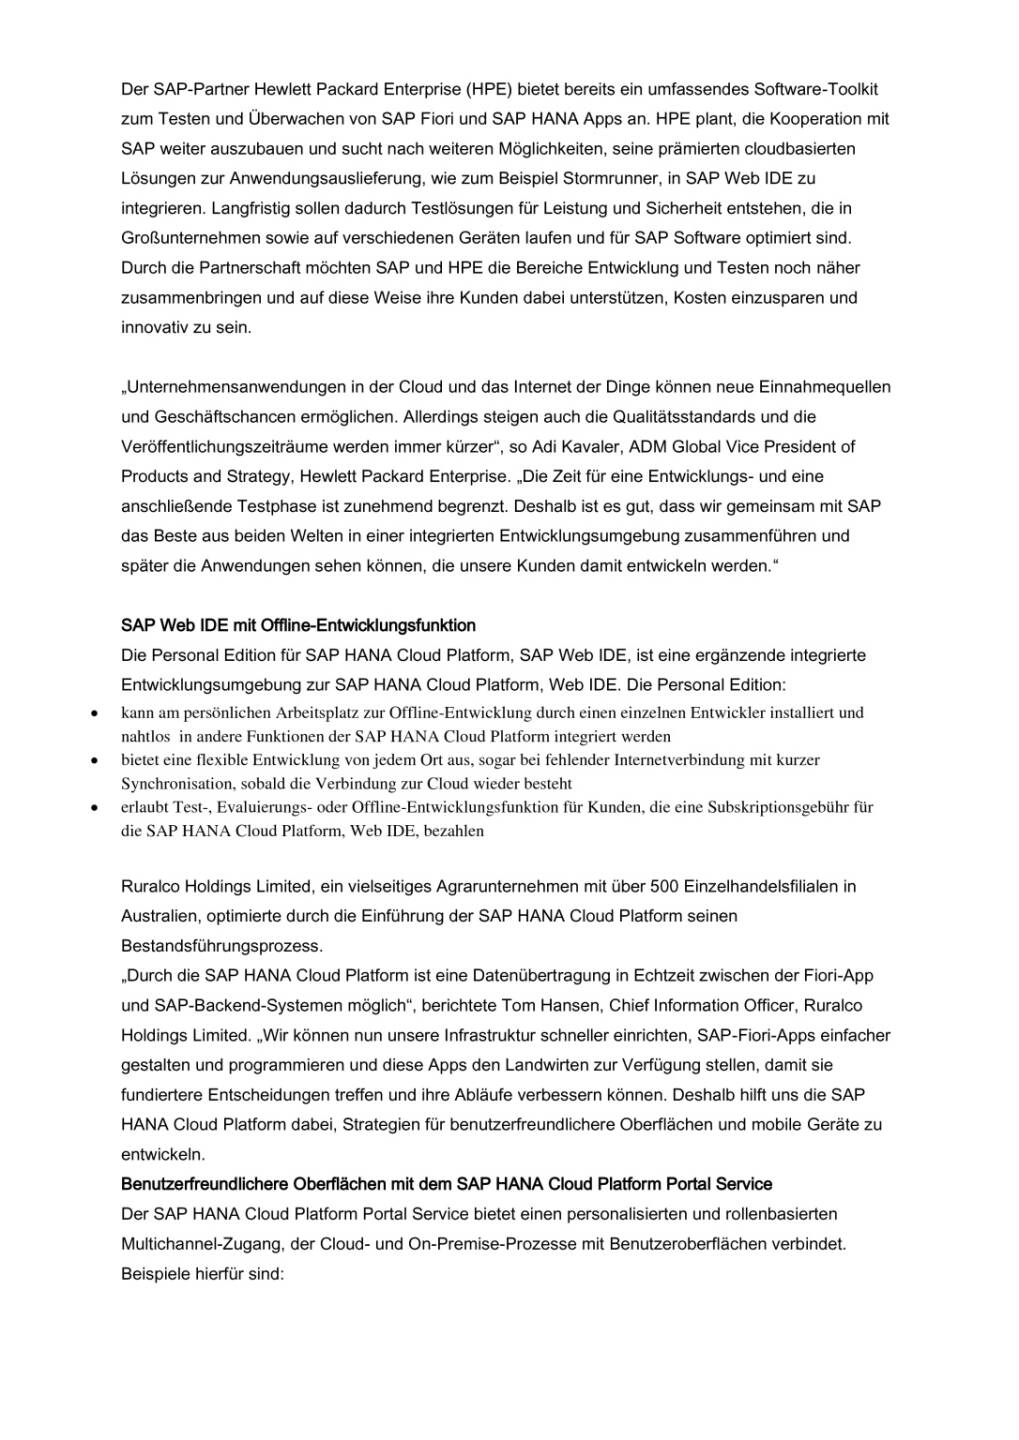 SAP: Platform-as-a-Service-Angebot , Seite 2/4, komplettes Dokument unter http://boerse-social.com/static/uploads/file_1799_sap_platform-as-a-service-angebot.pdf